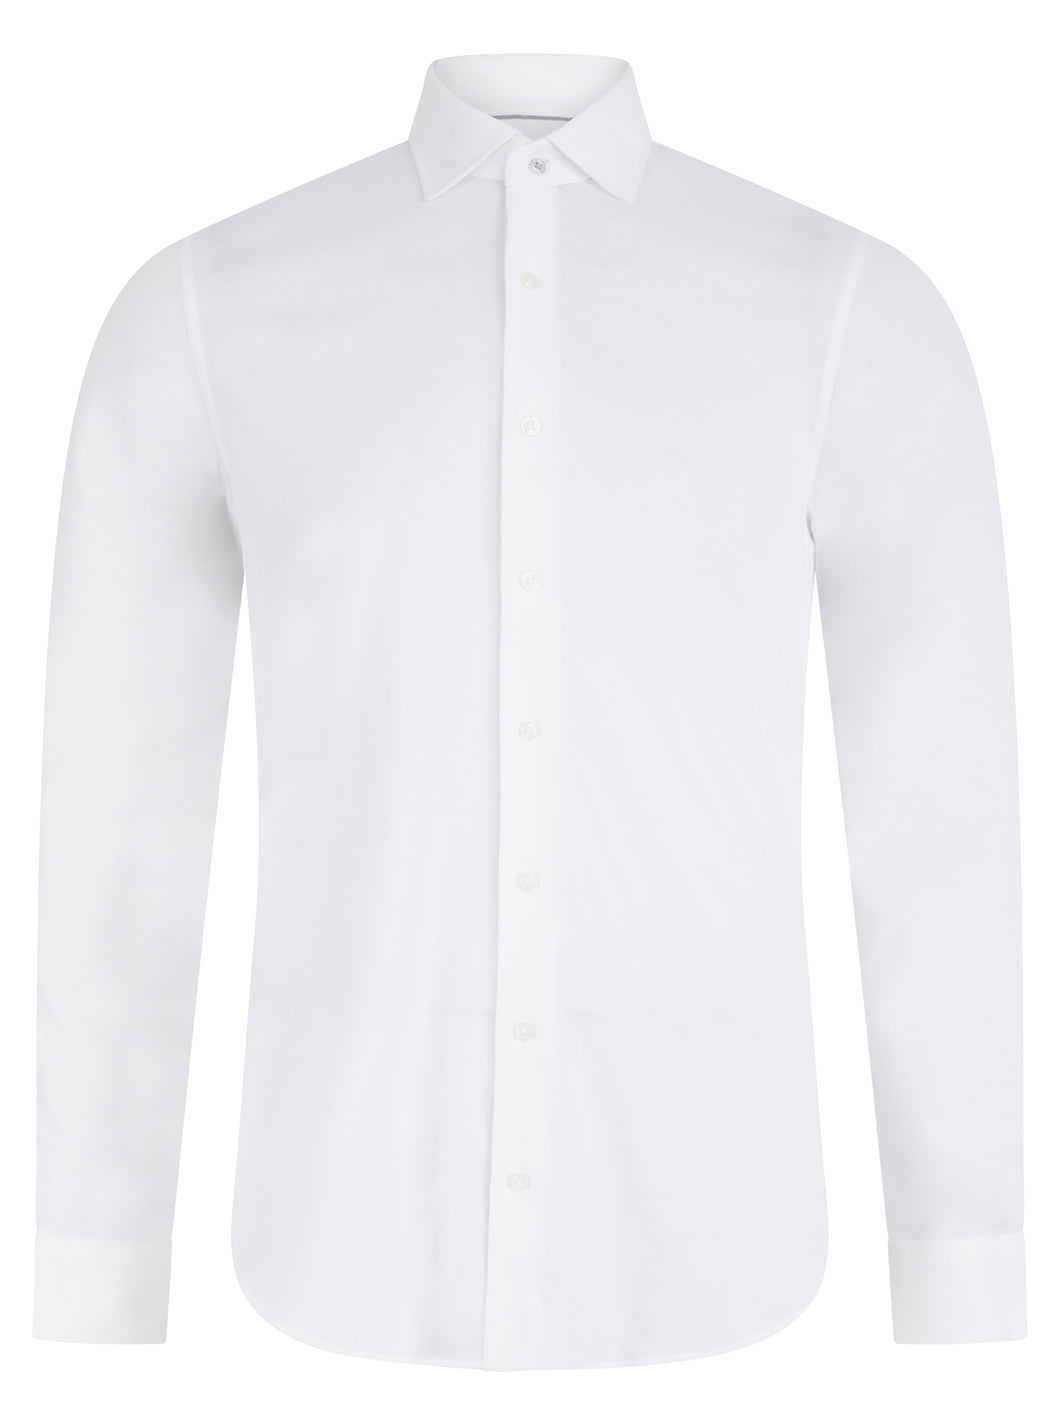 Michael Kors Pique Shirt White